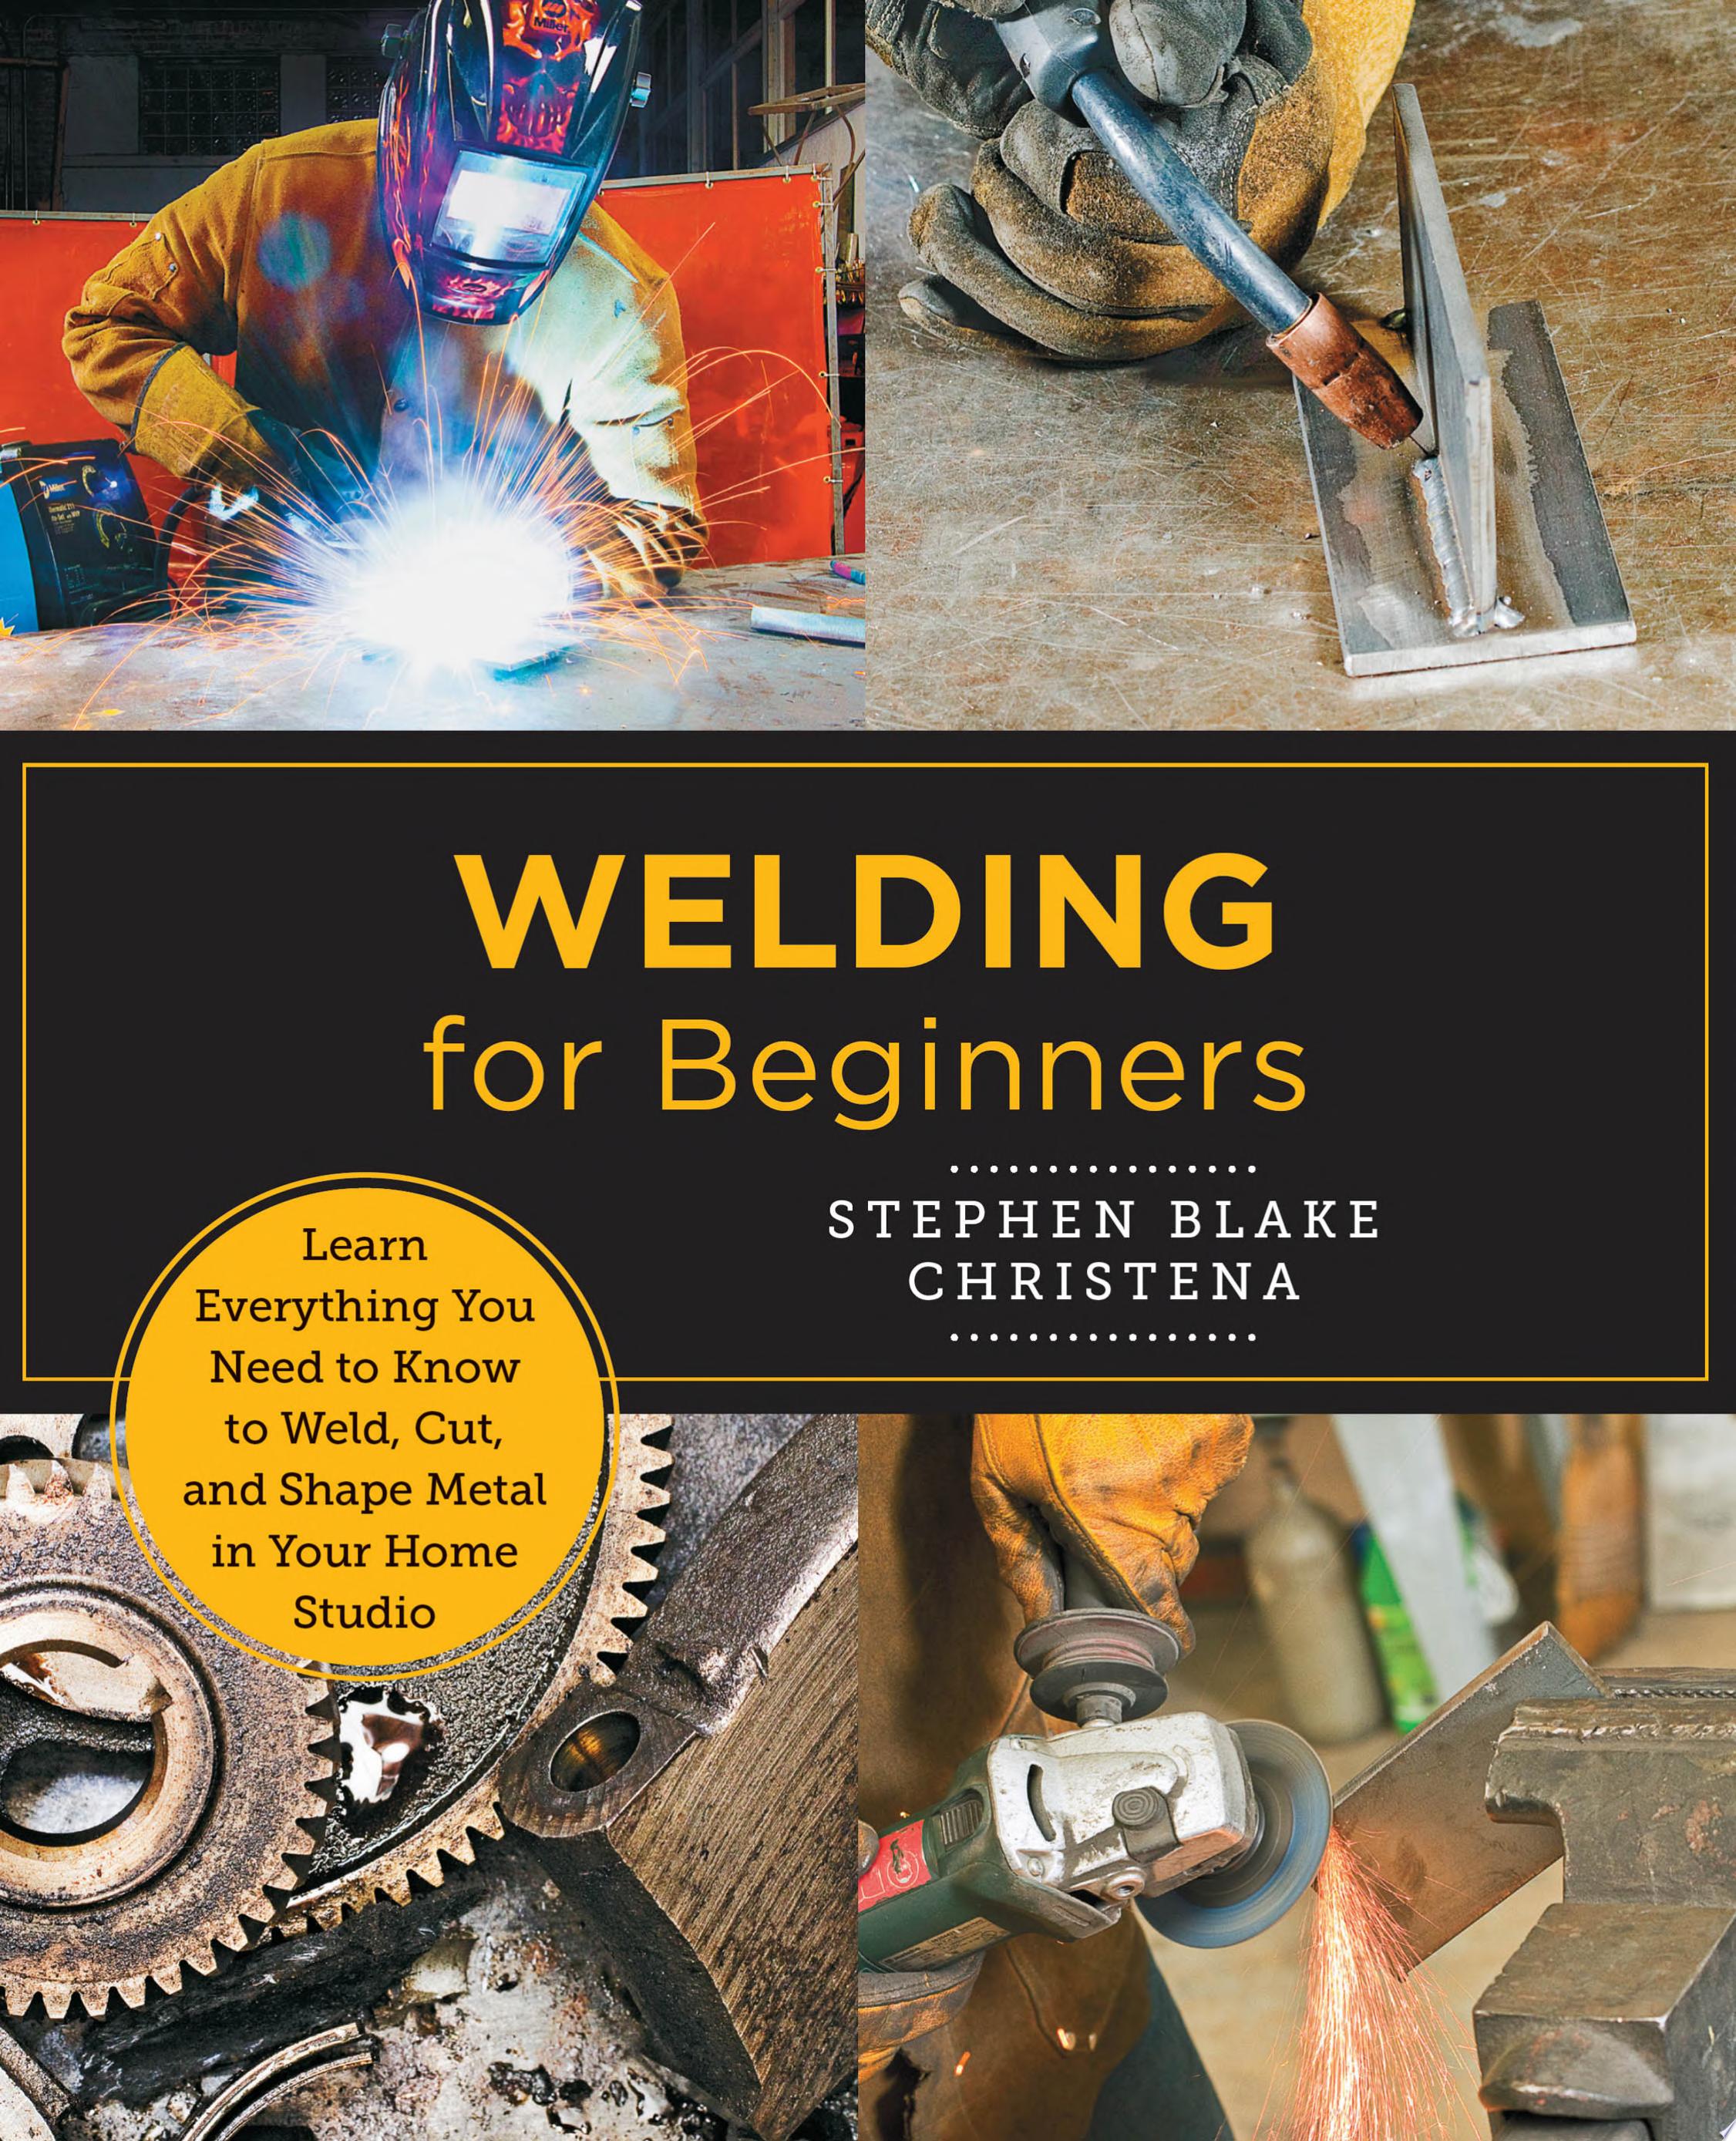 Image for "Welding for Beginners"